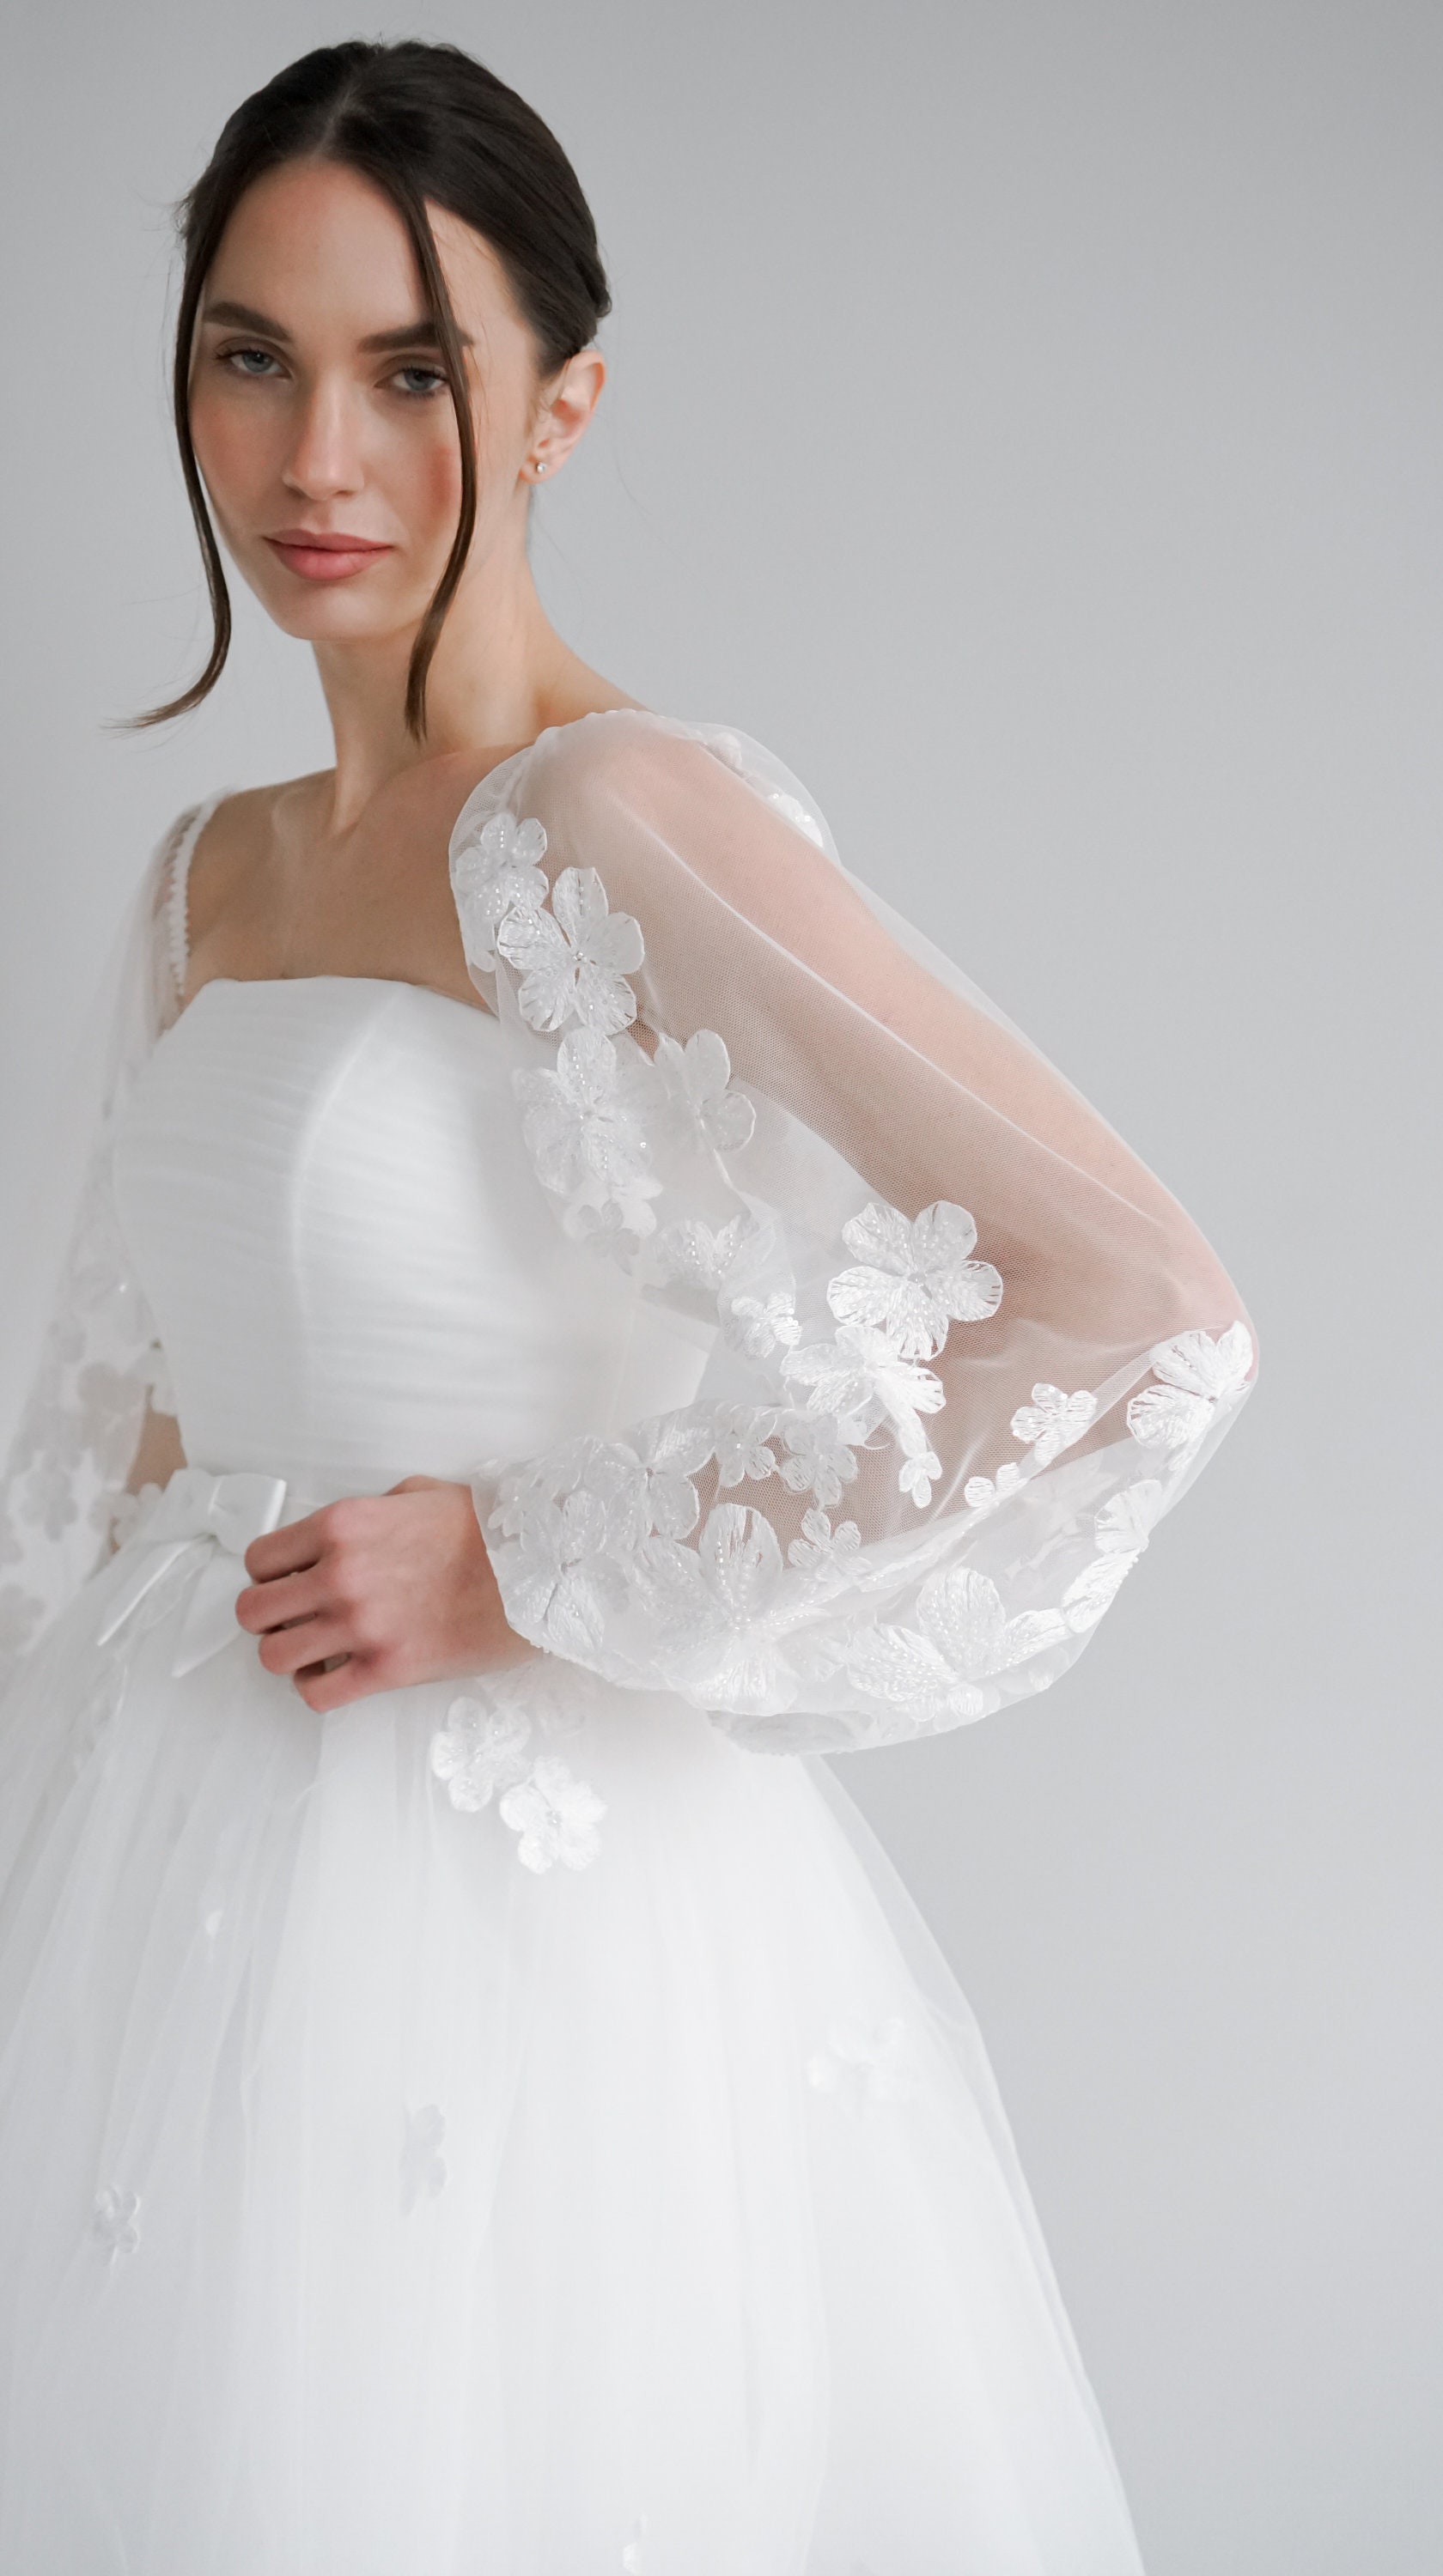 Daniela Lace SHORT WEDDING DRESS. Ivory or White Crochet Lace